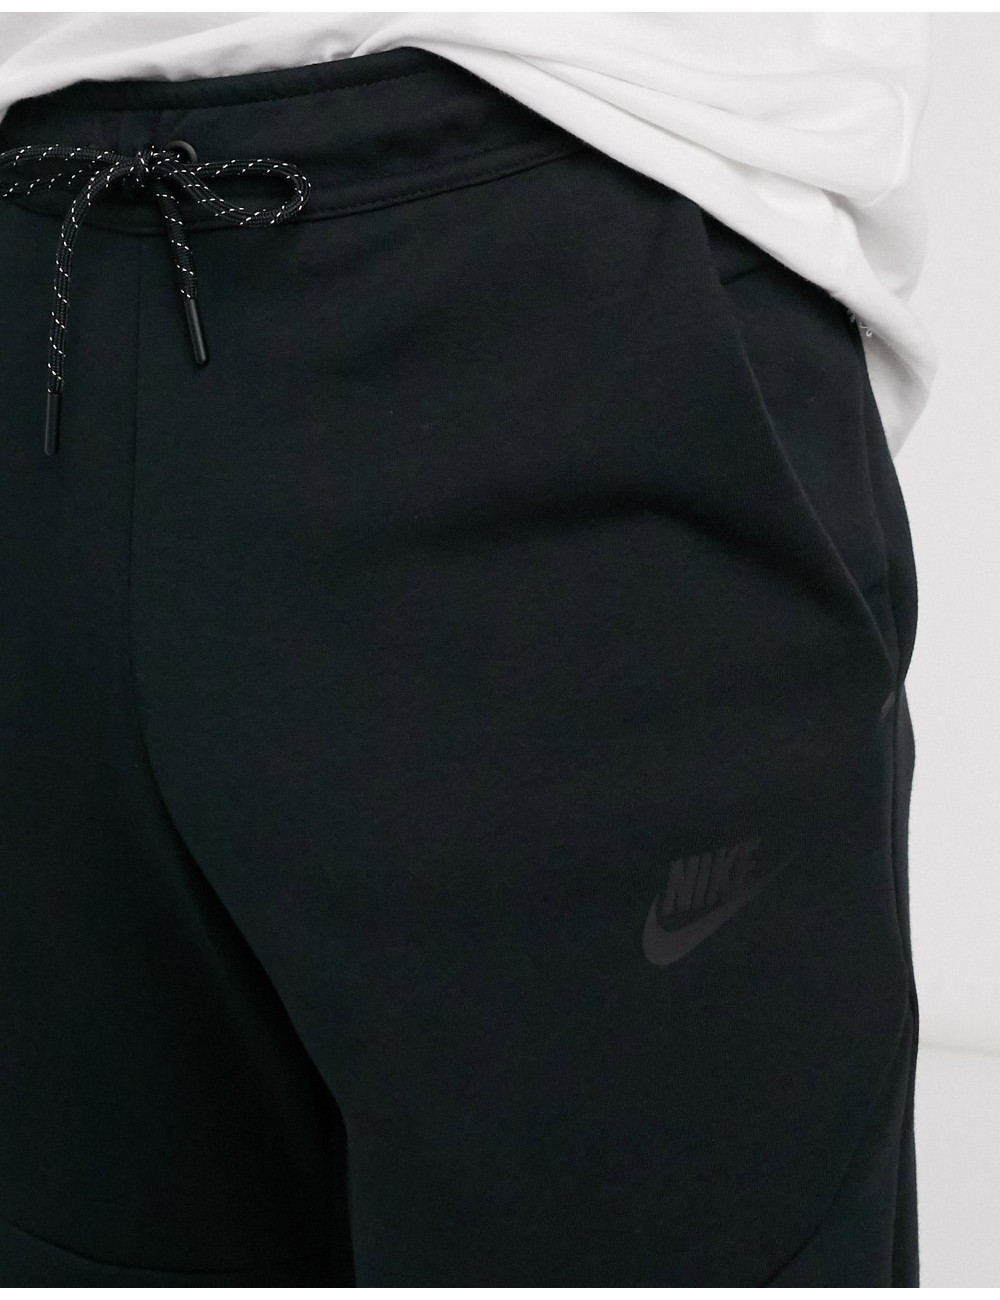 Nike Tech Fleece sweatpants...